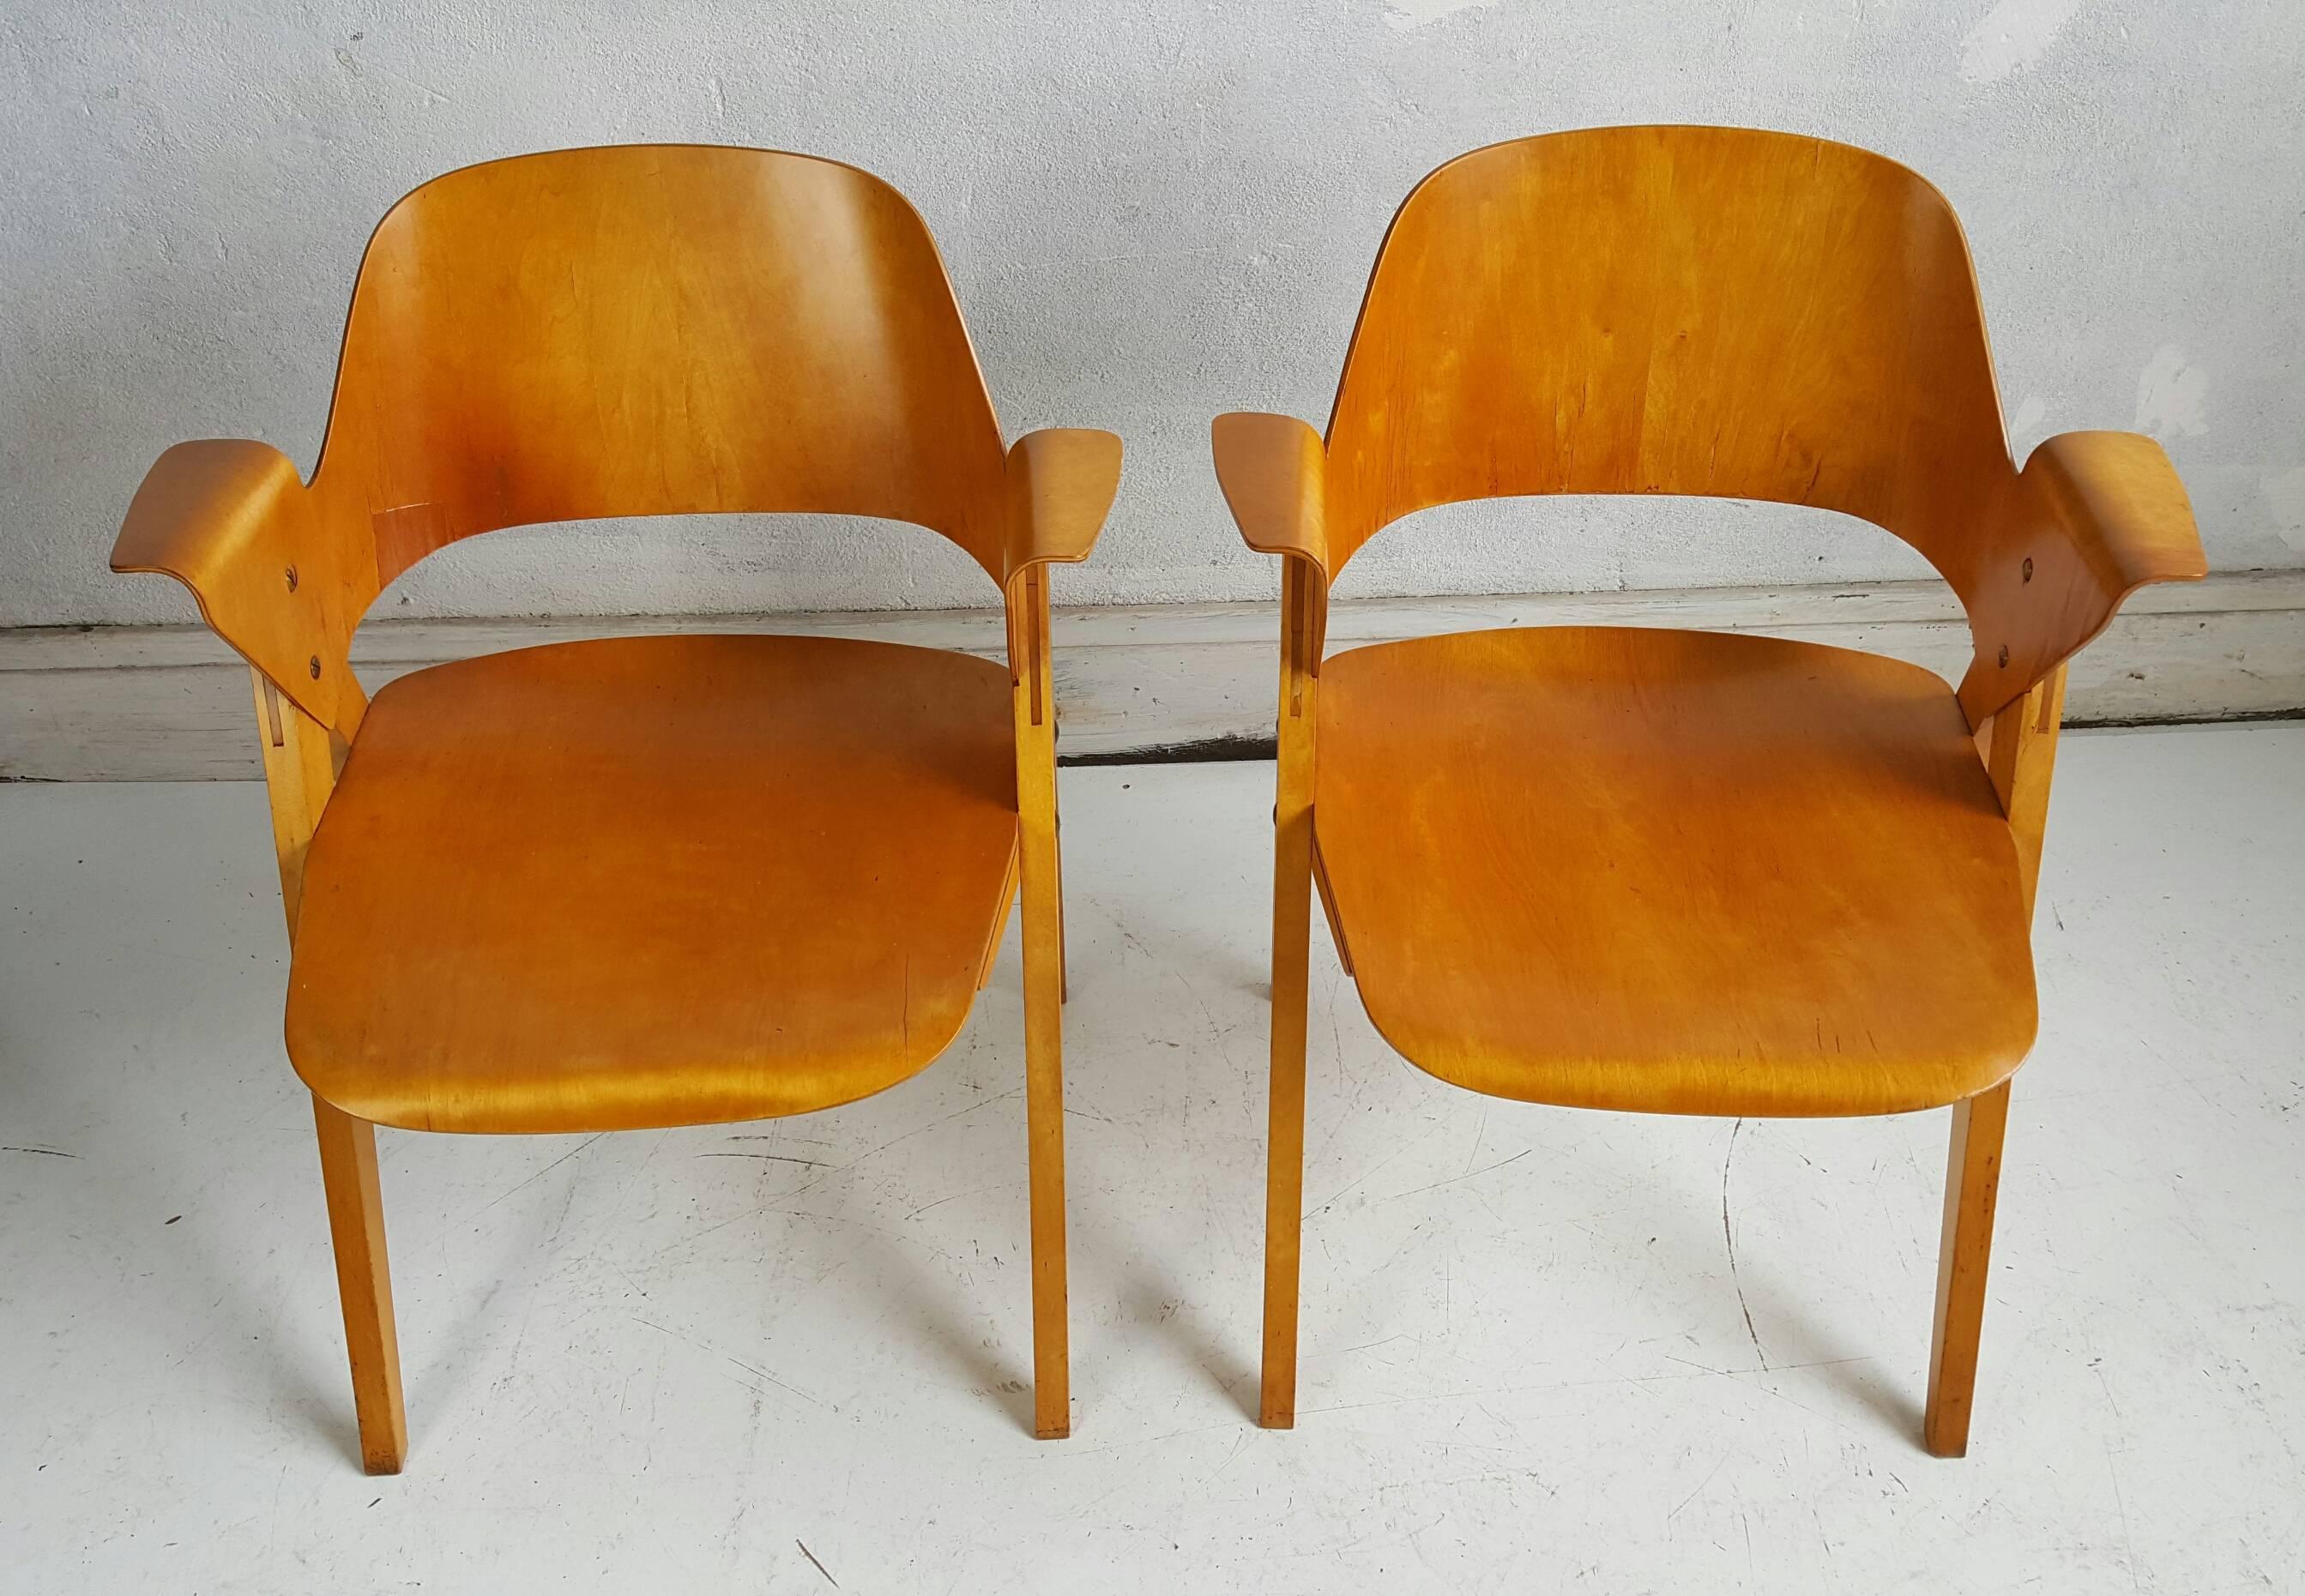 Laminated Plywood Arm Chairs by Elias Svedberg, Nordiska Konipaniet, Sweden